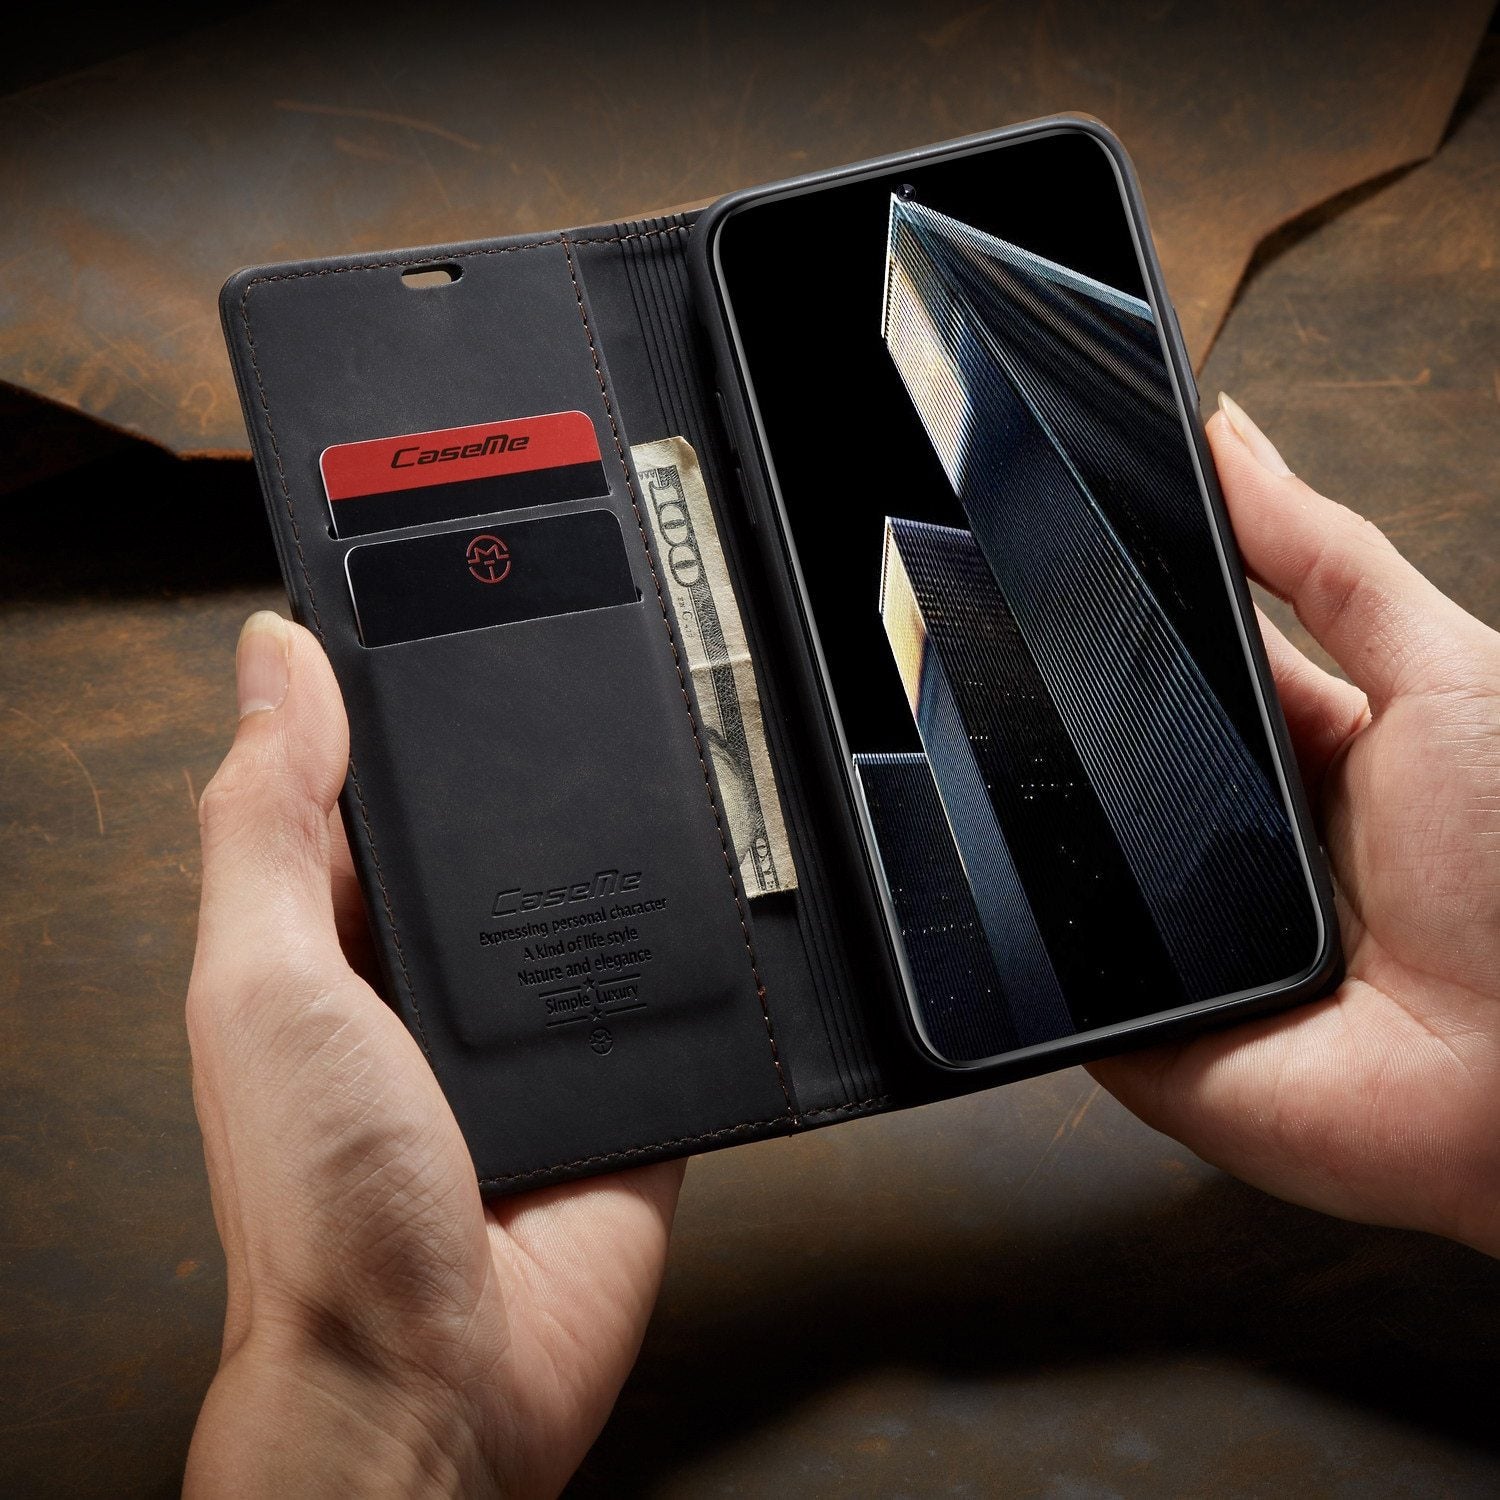 Premium Leather Belt phone case – Gifts Galla